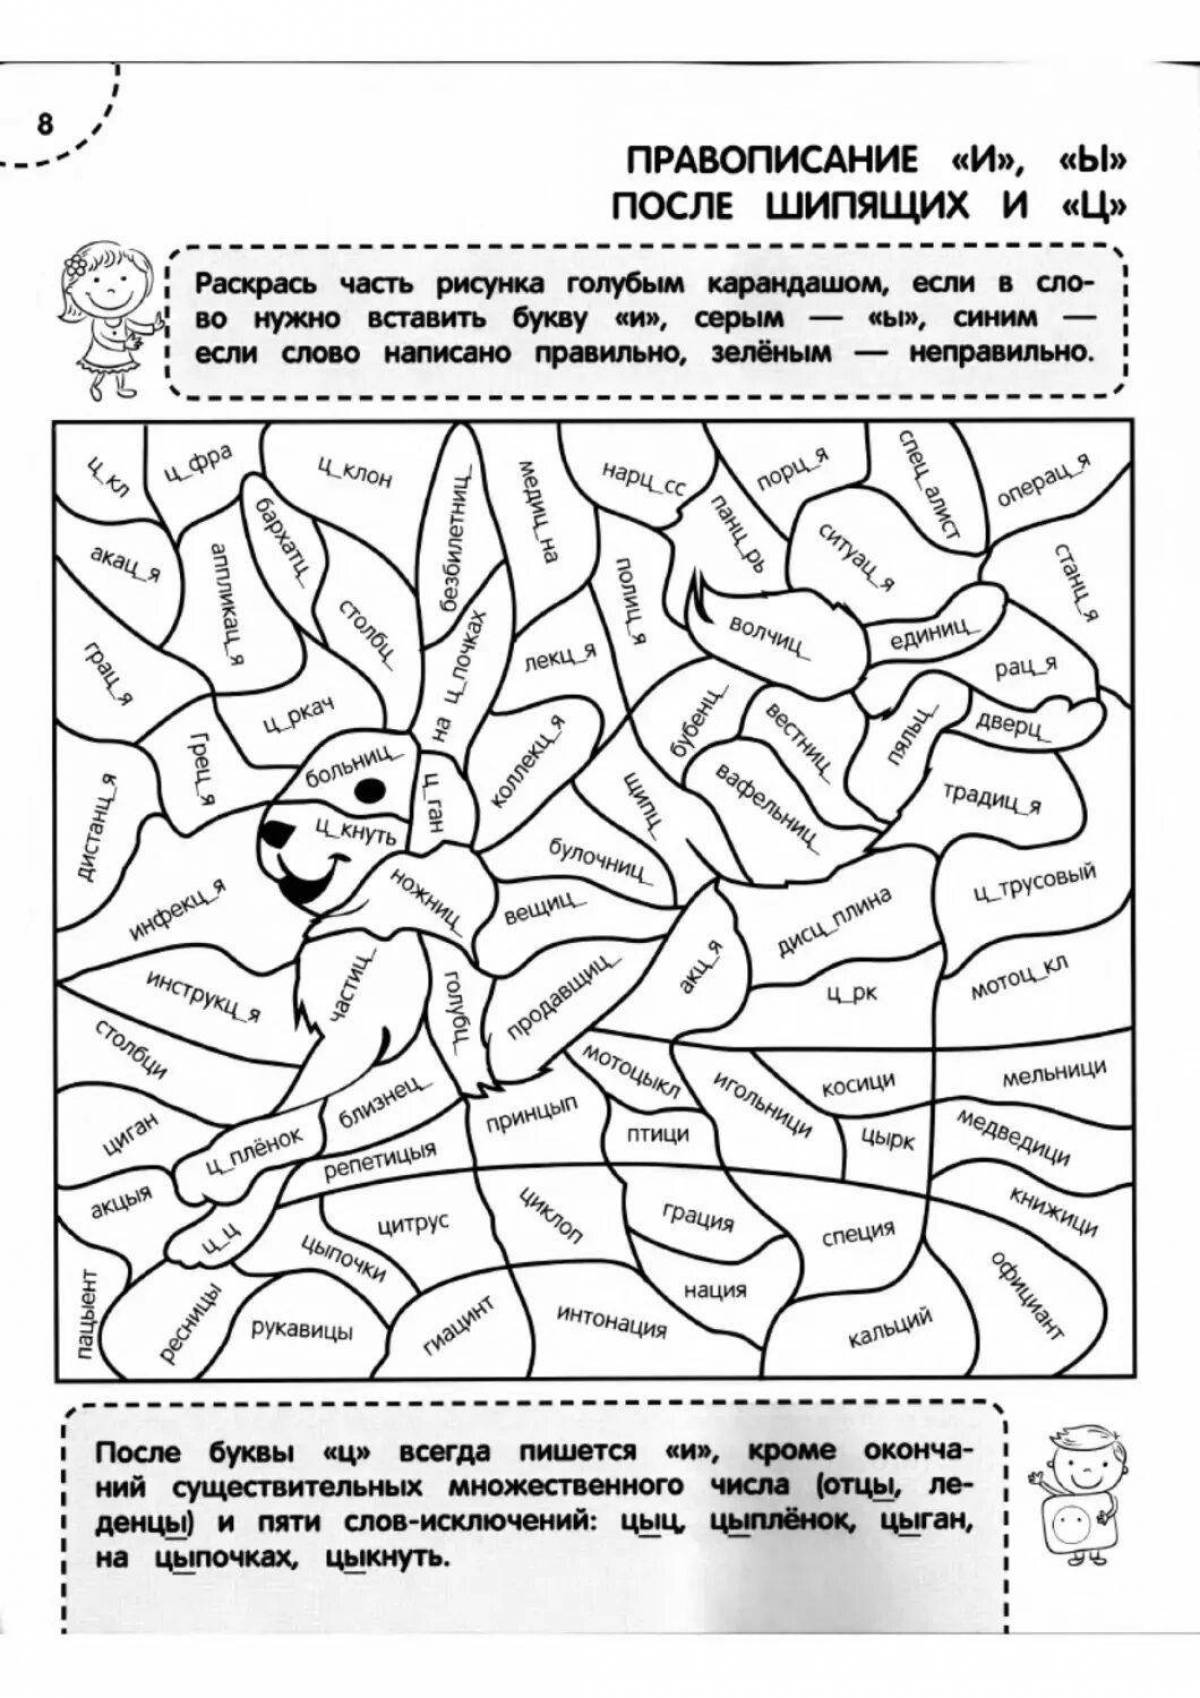 Charming grade 6 russian coloring book